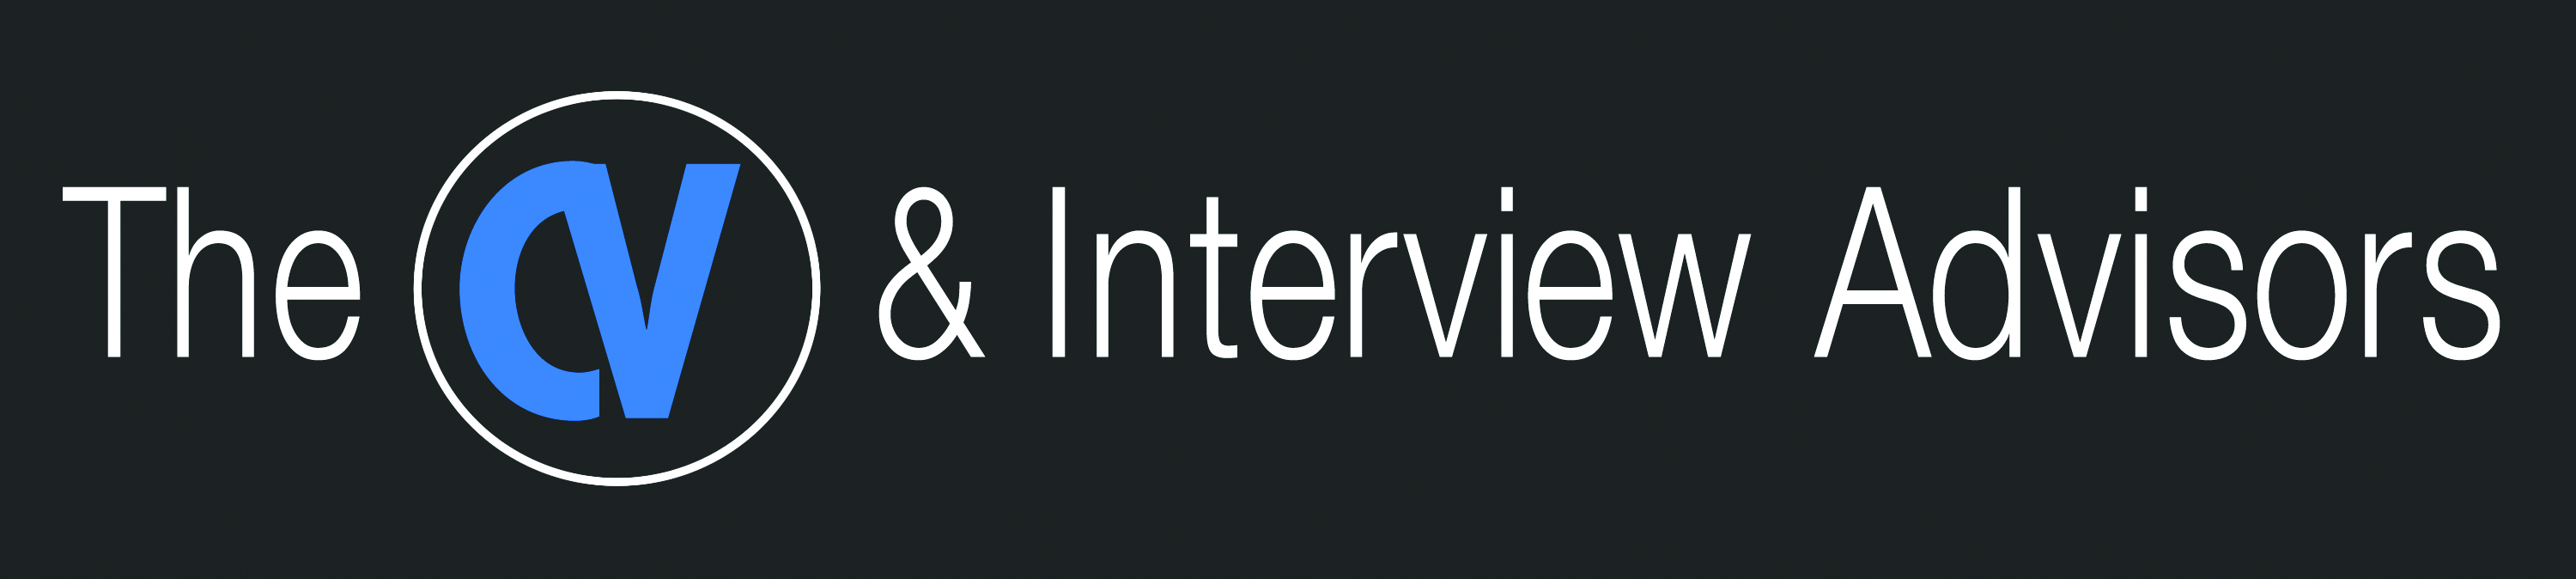 CV and Interview Advisors logo